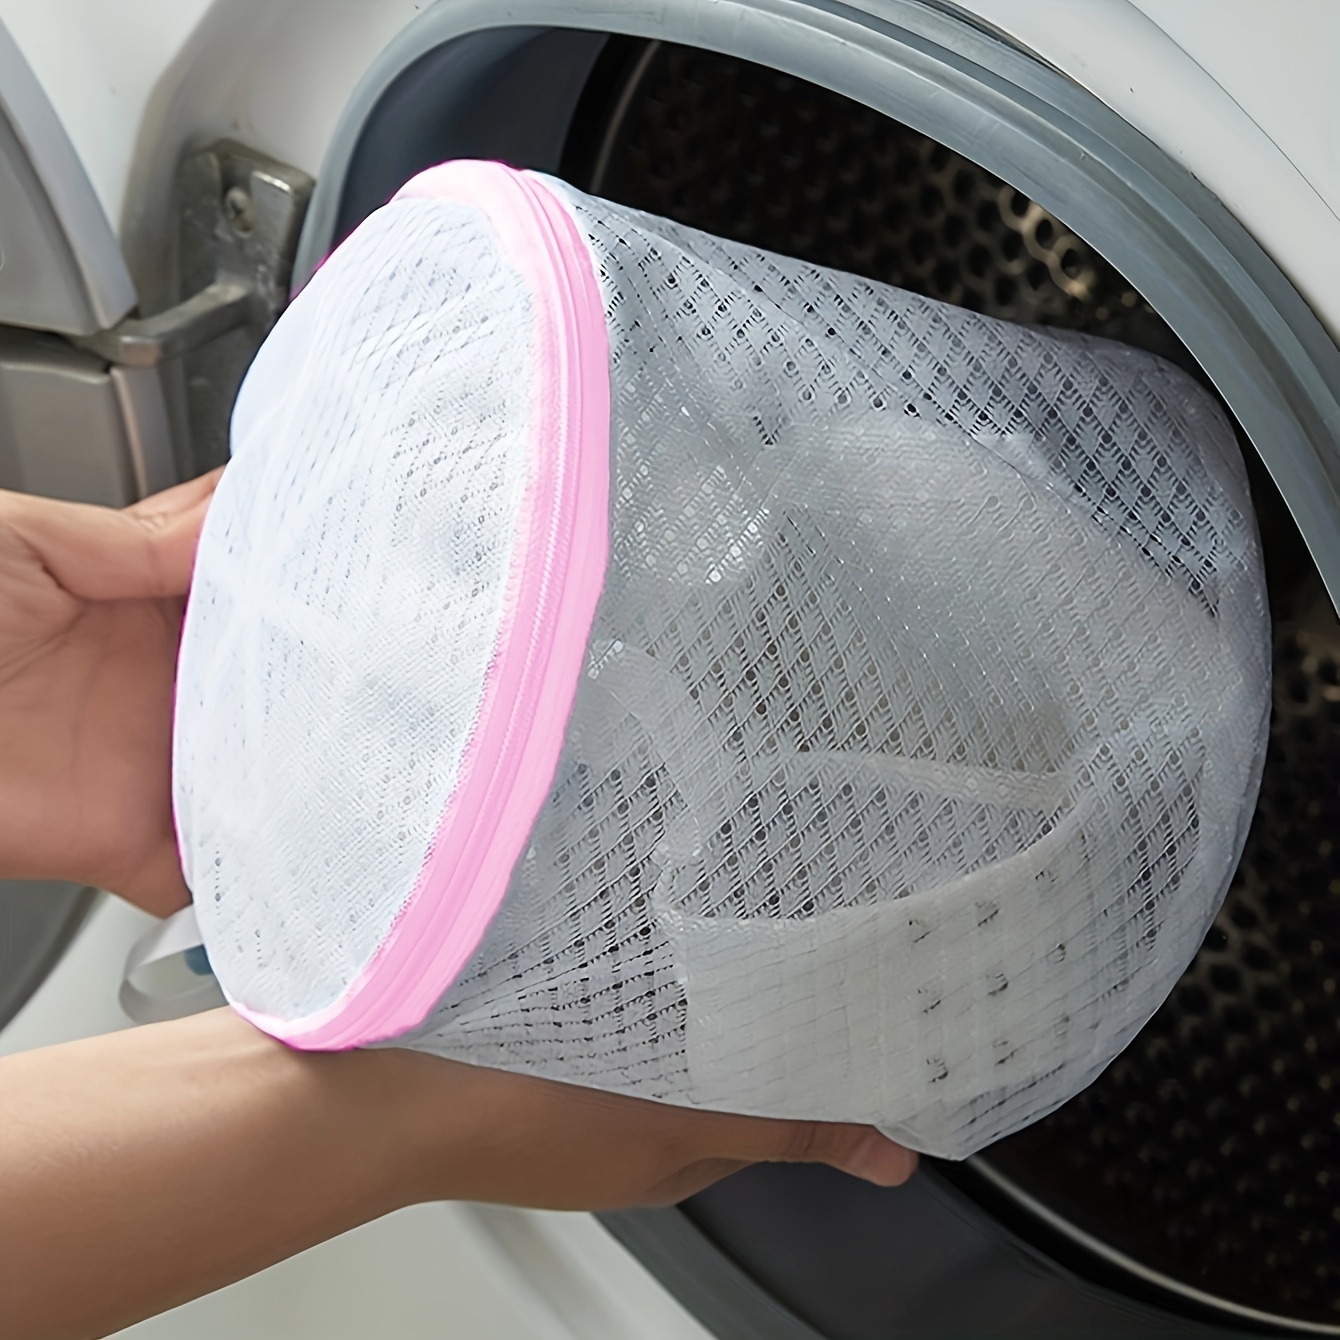 Anti-deformation Silicone Bra Washing Bag Mesh Organizer Net Dryer